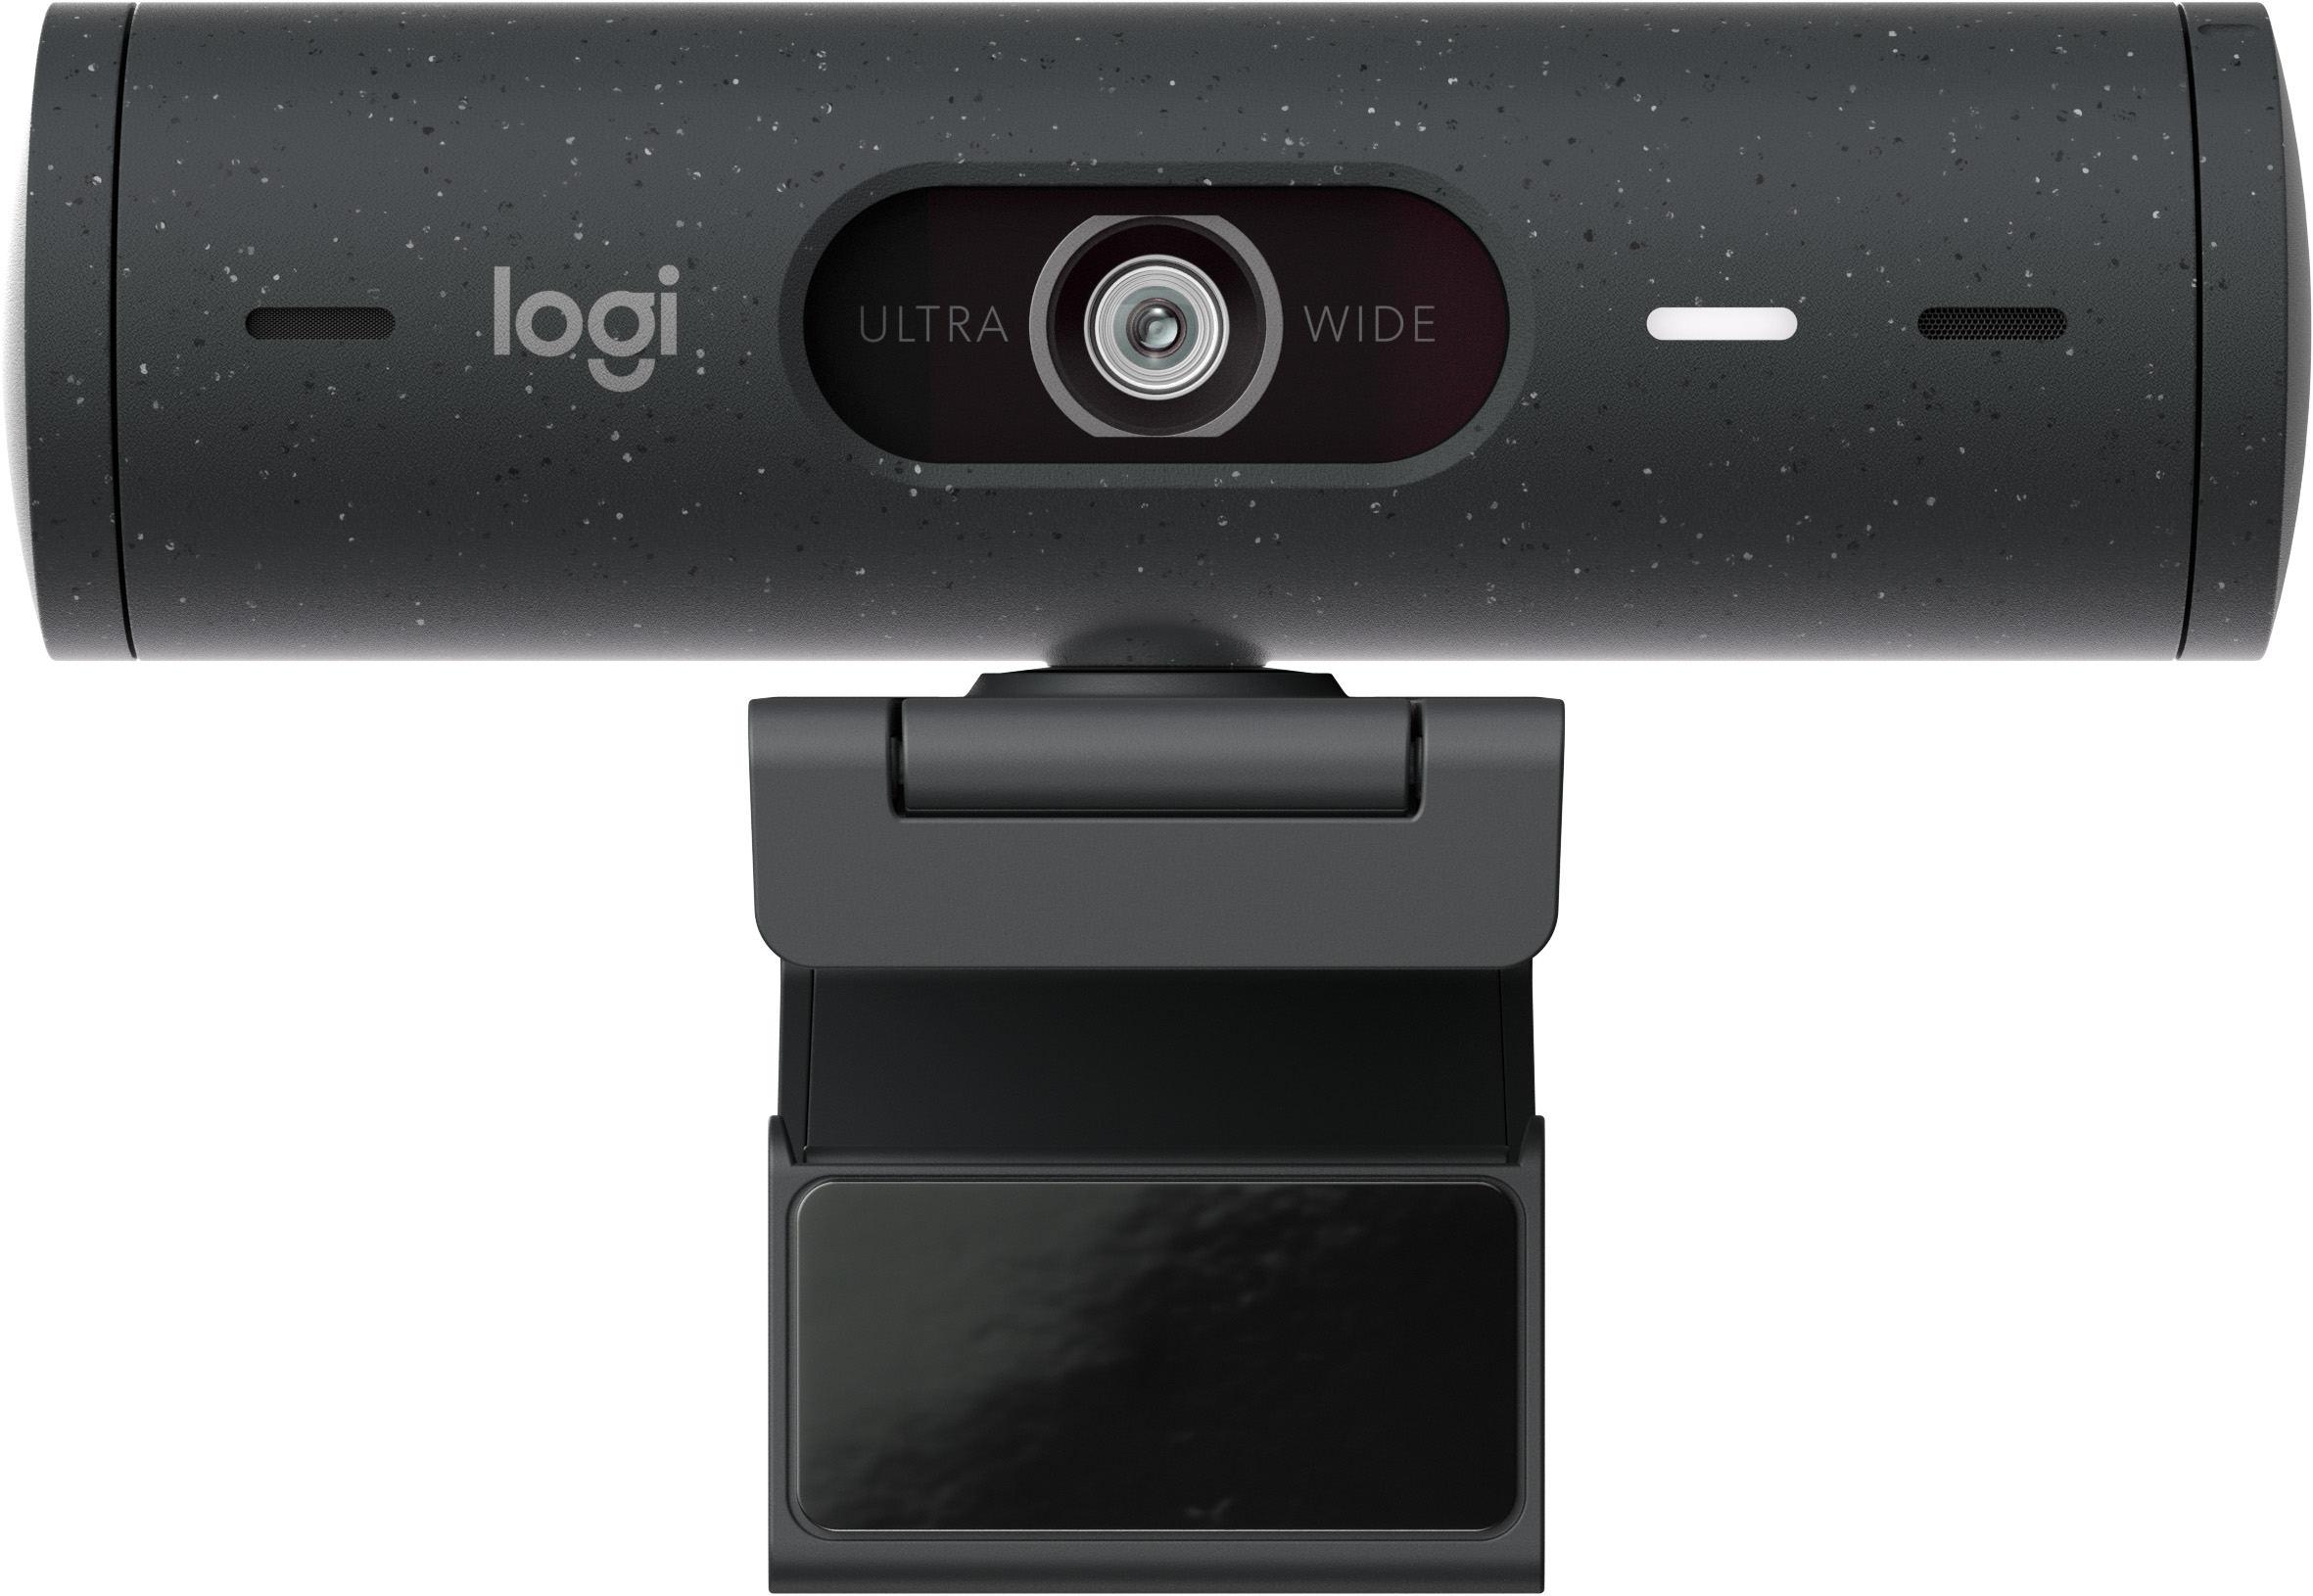 Logitech Webcam BRIO 505, Full HD 1080p, grafit 1920x1080, 30 FPS, USB-C, Privacy Shutter, Business